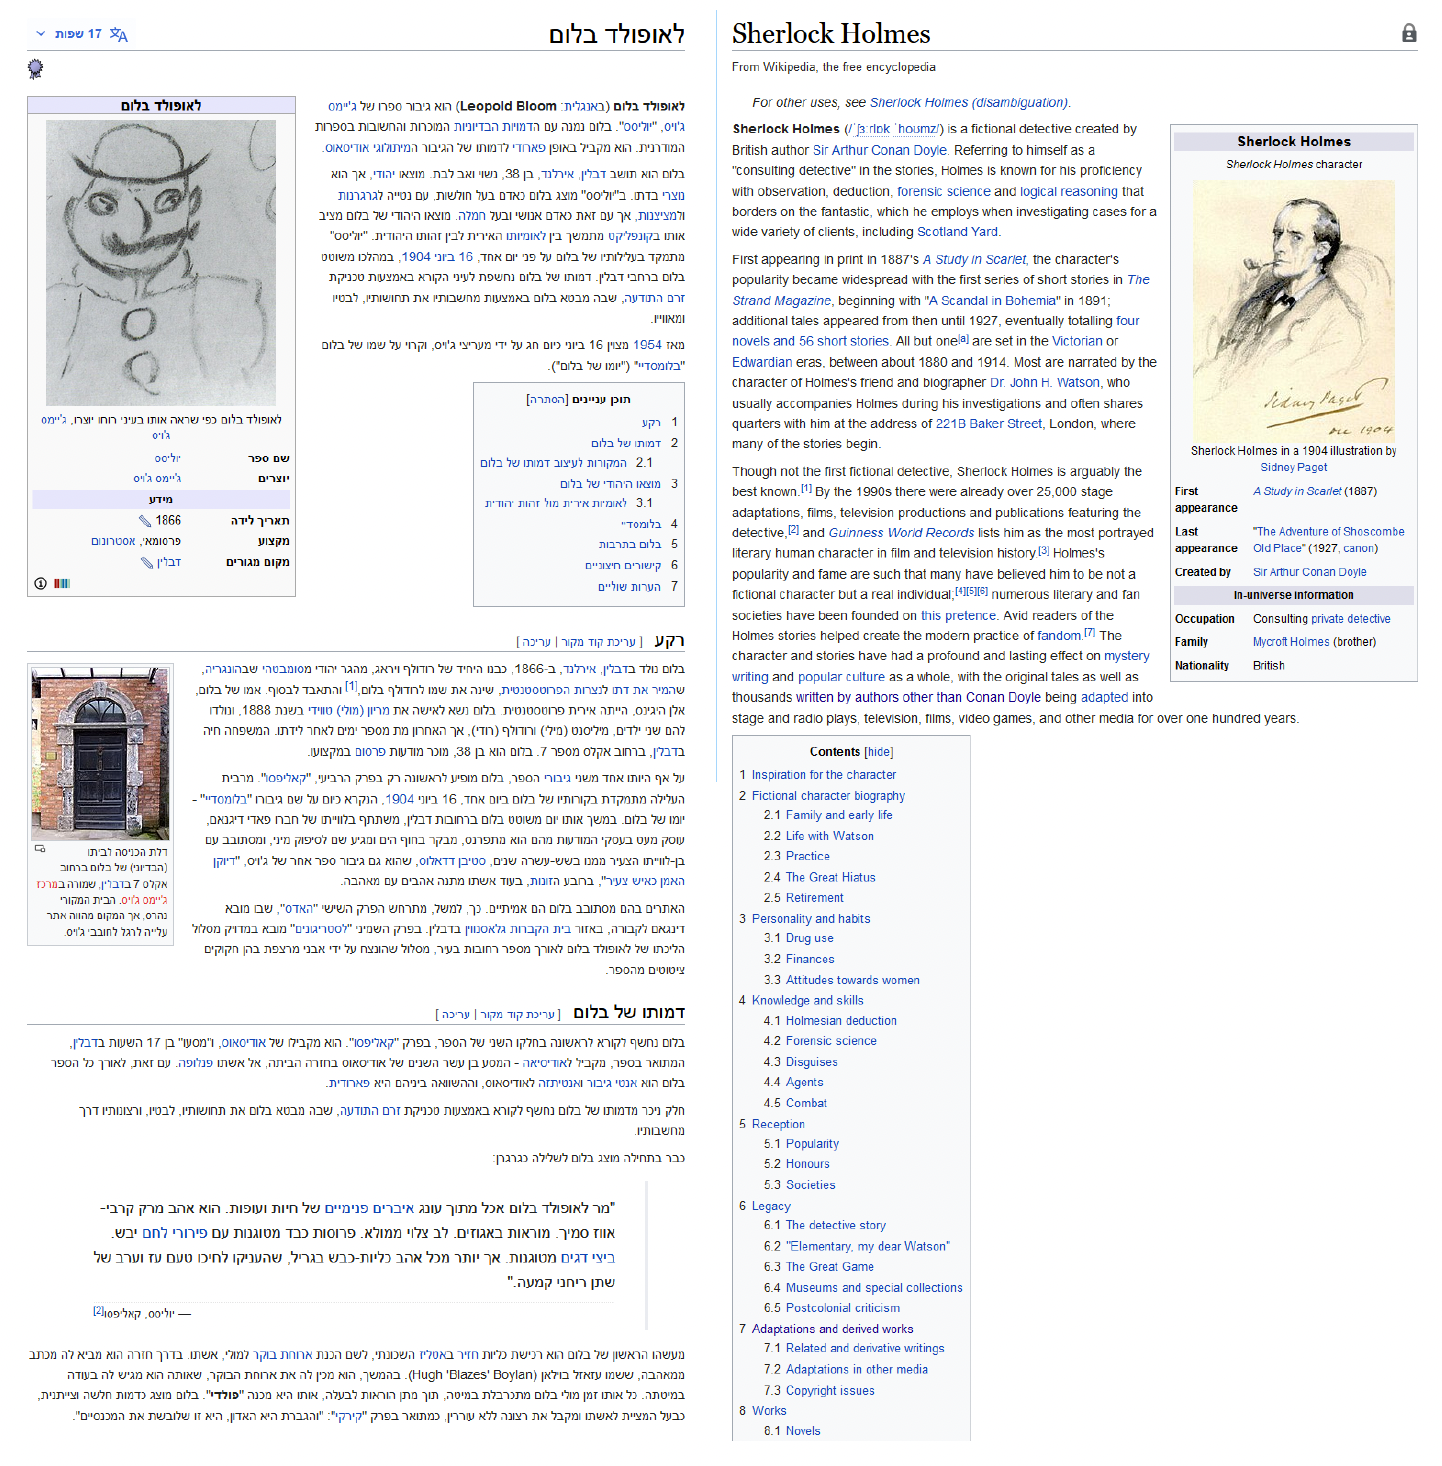 Media Markt - Simple English Wikipedia, the free encyclopedia